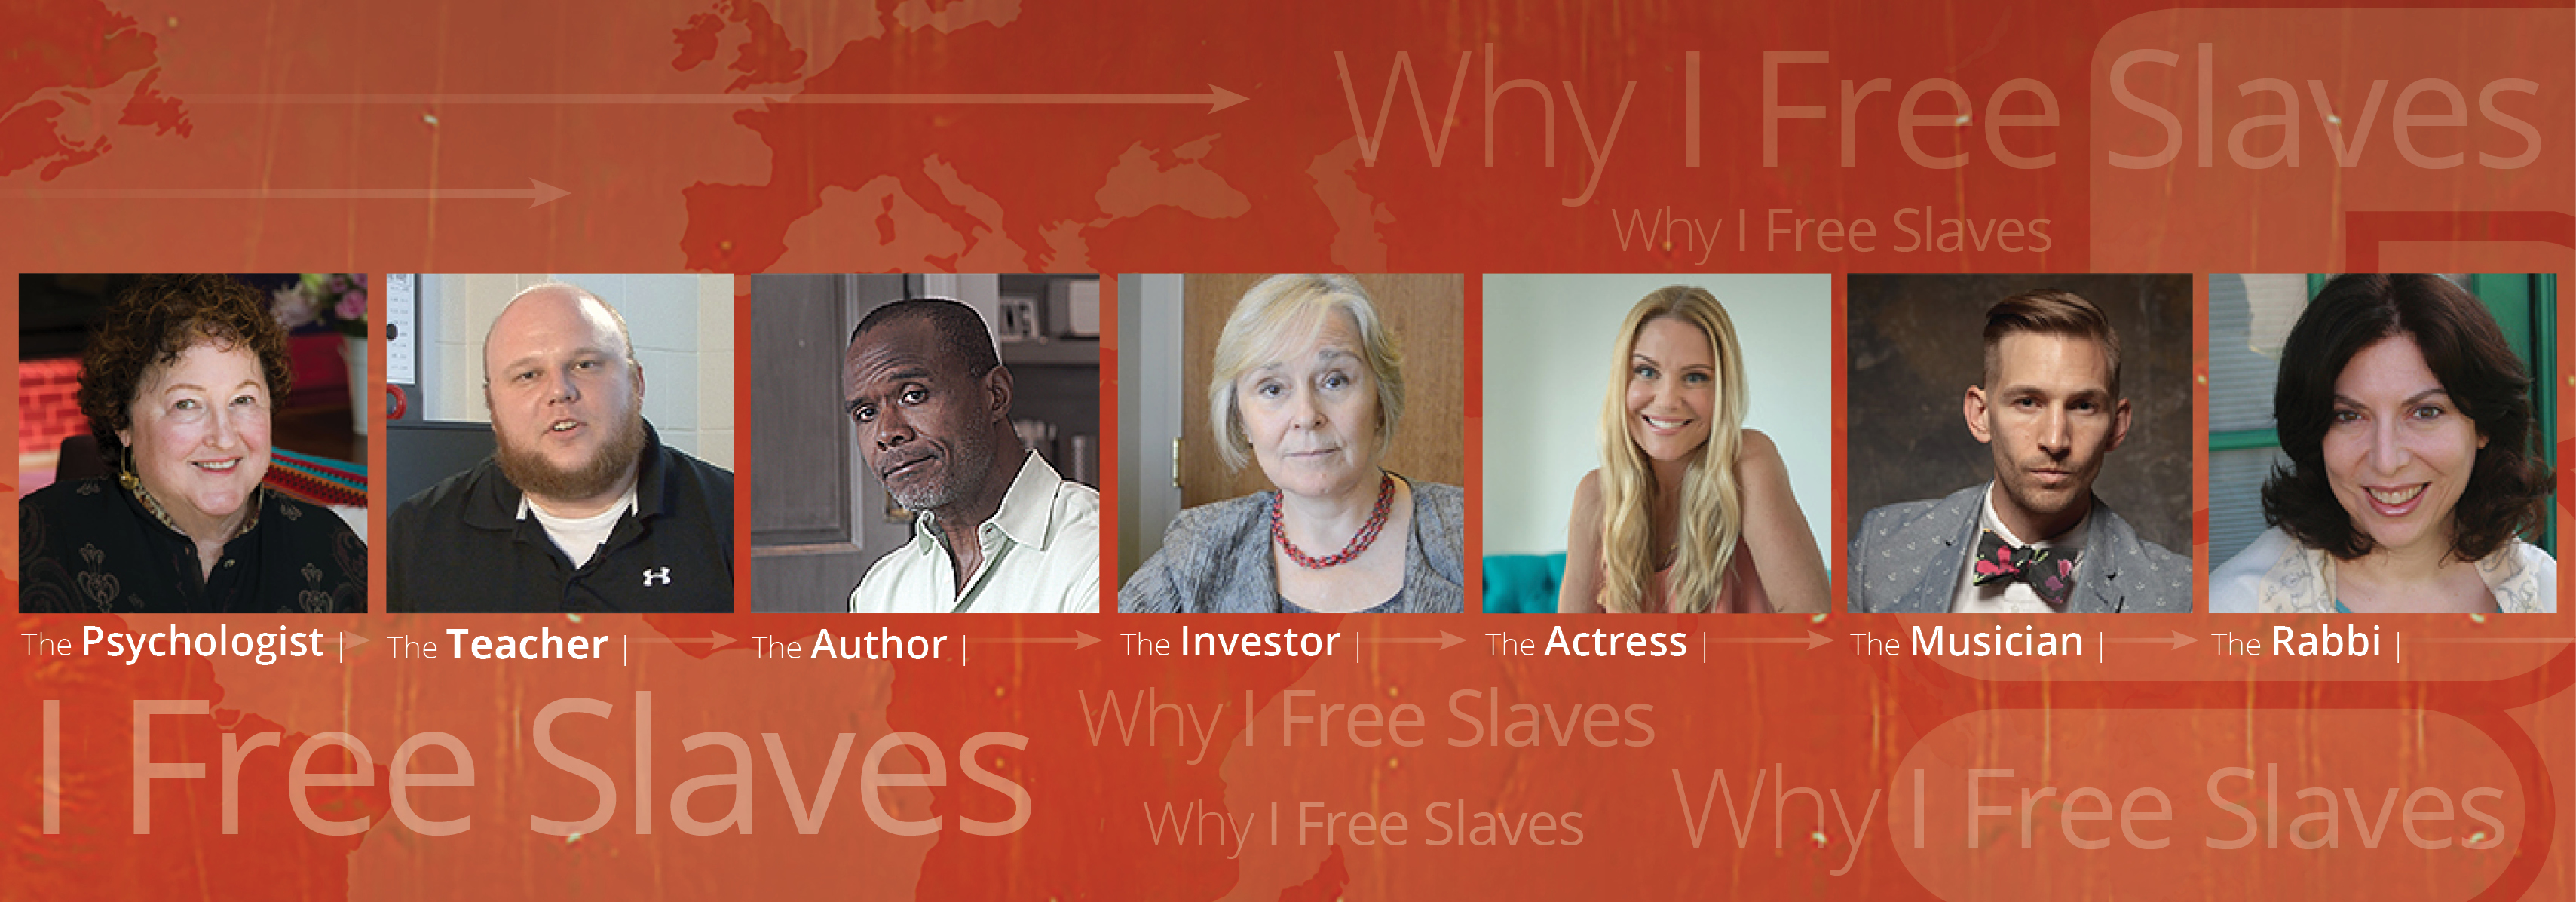 Why I Free Slaves: Author James Hannaham